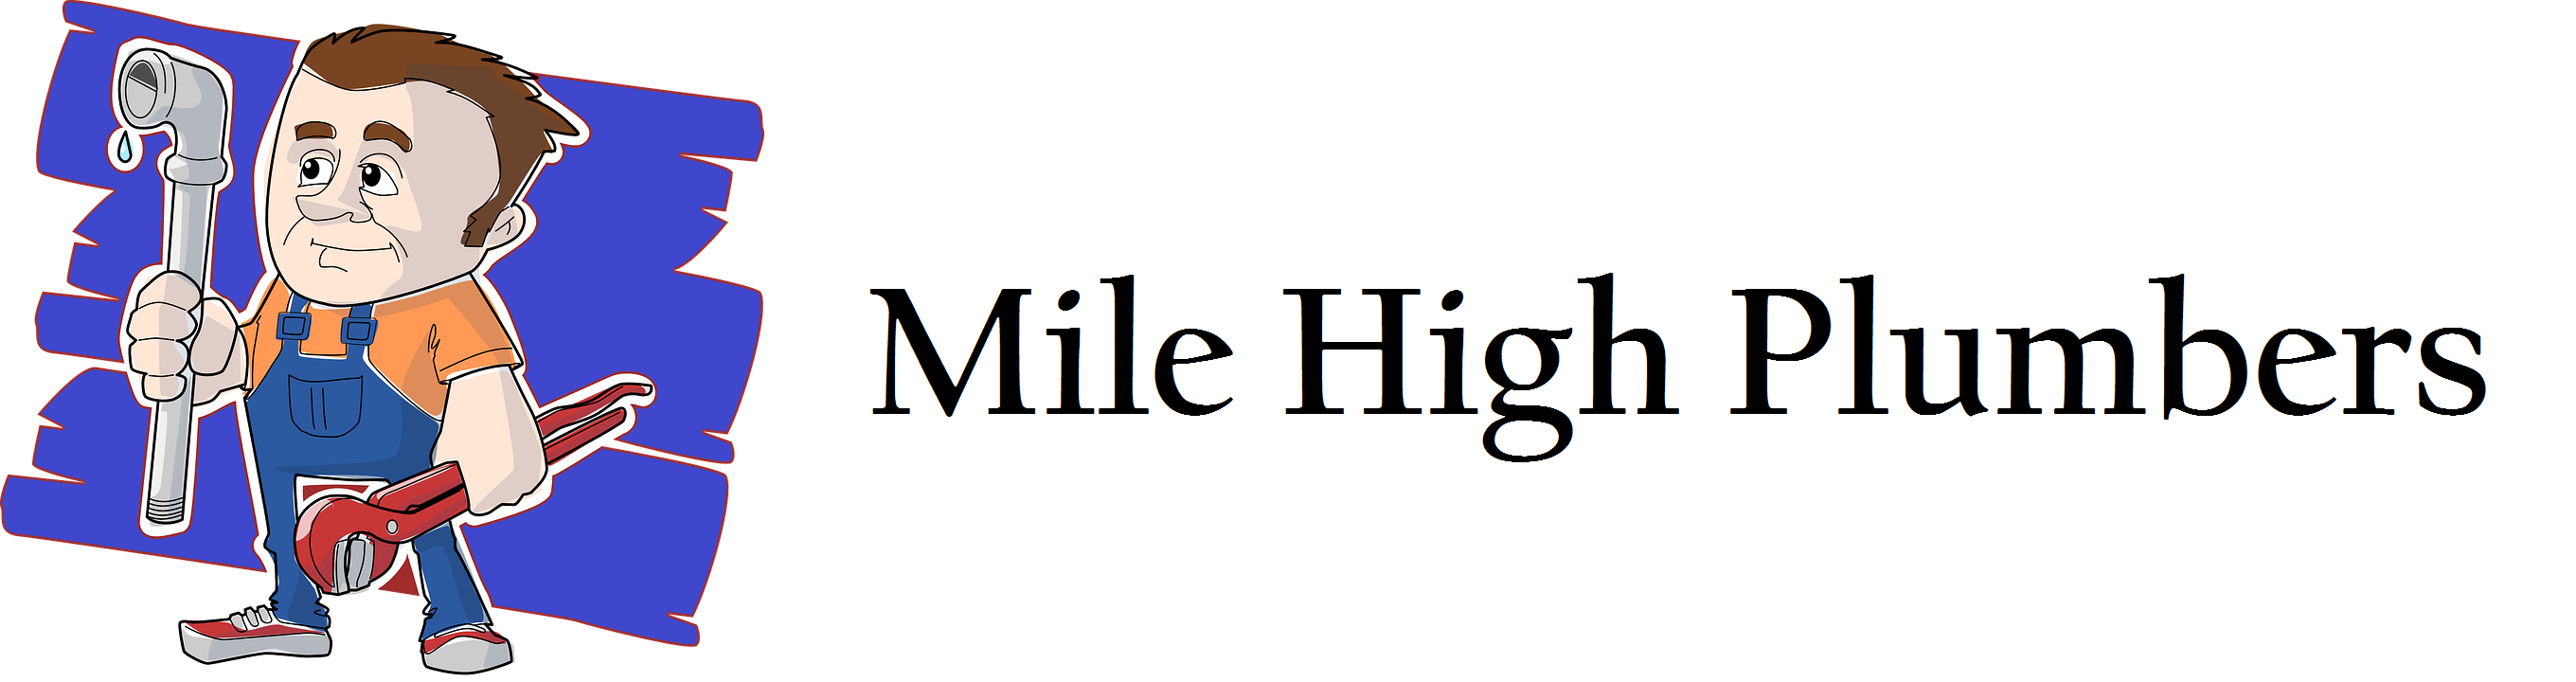 Mile High Plumbers